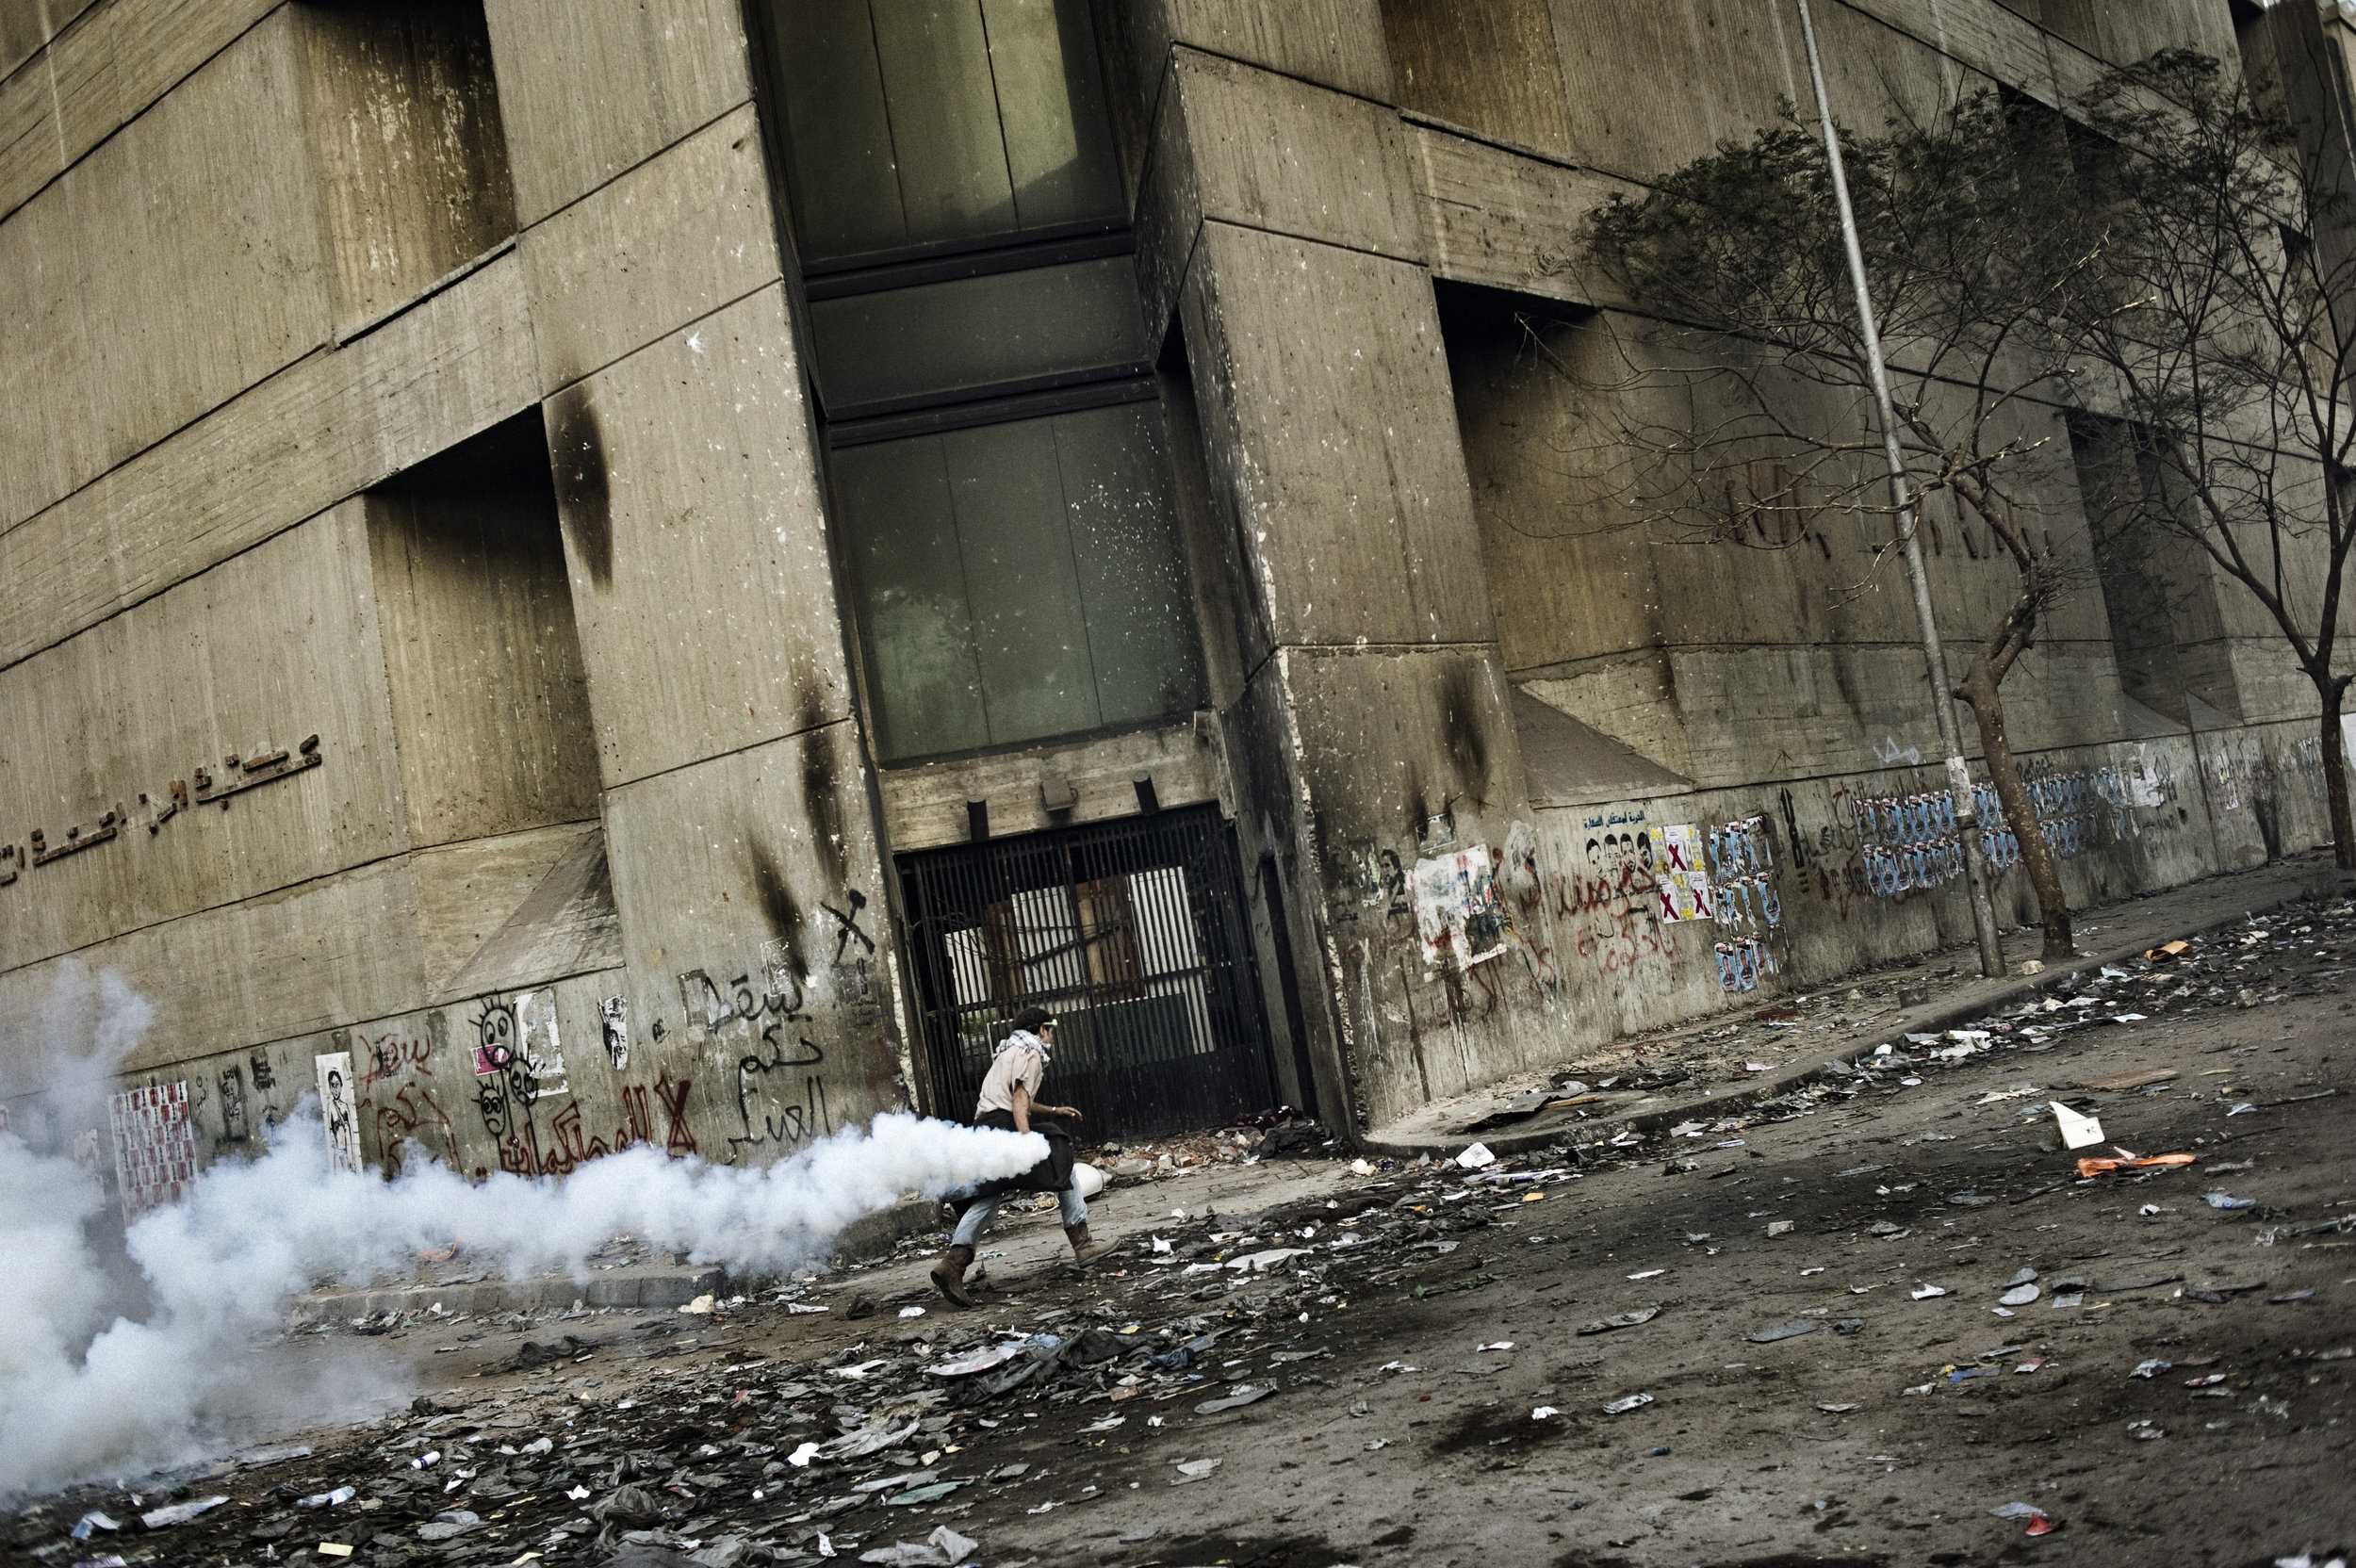   Cairo  Egypt November 23, 2011: A protester runs with a tear gas canister along Mohamed Mahmoud street, November 23, 2011.
 